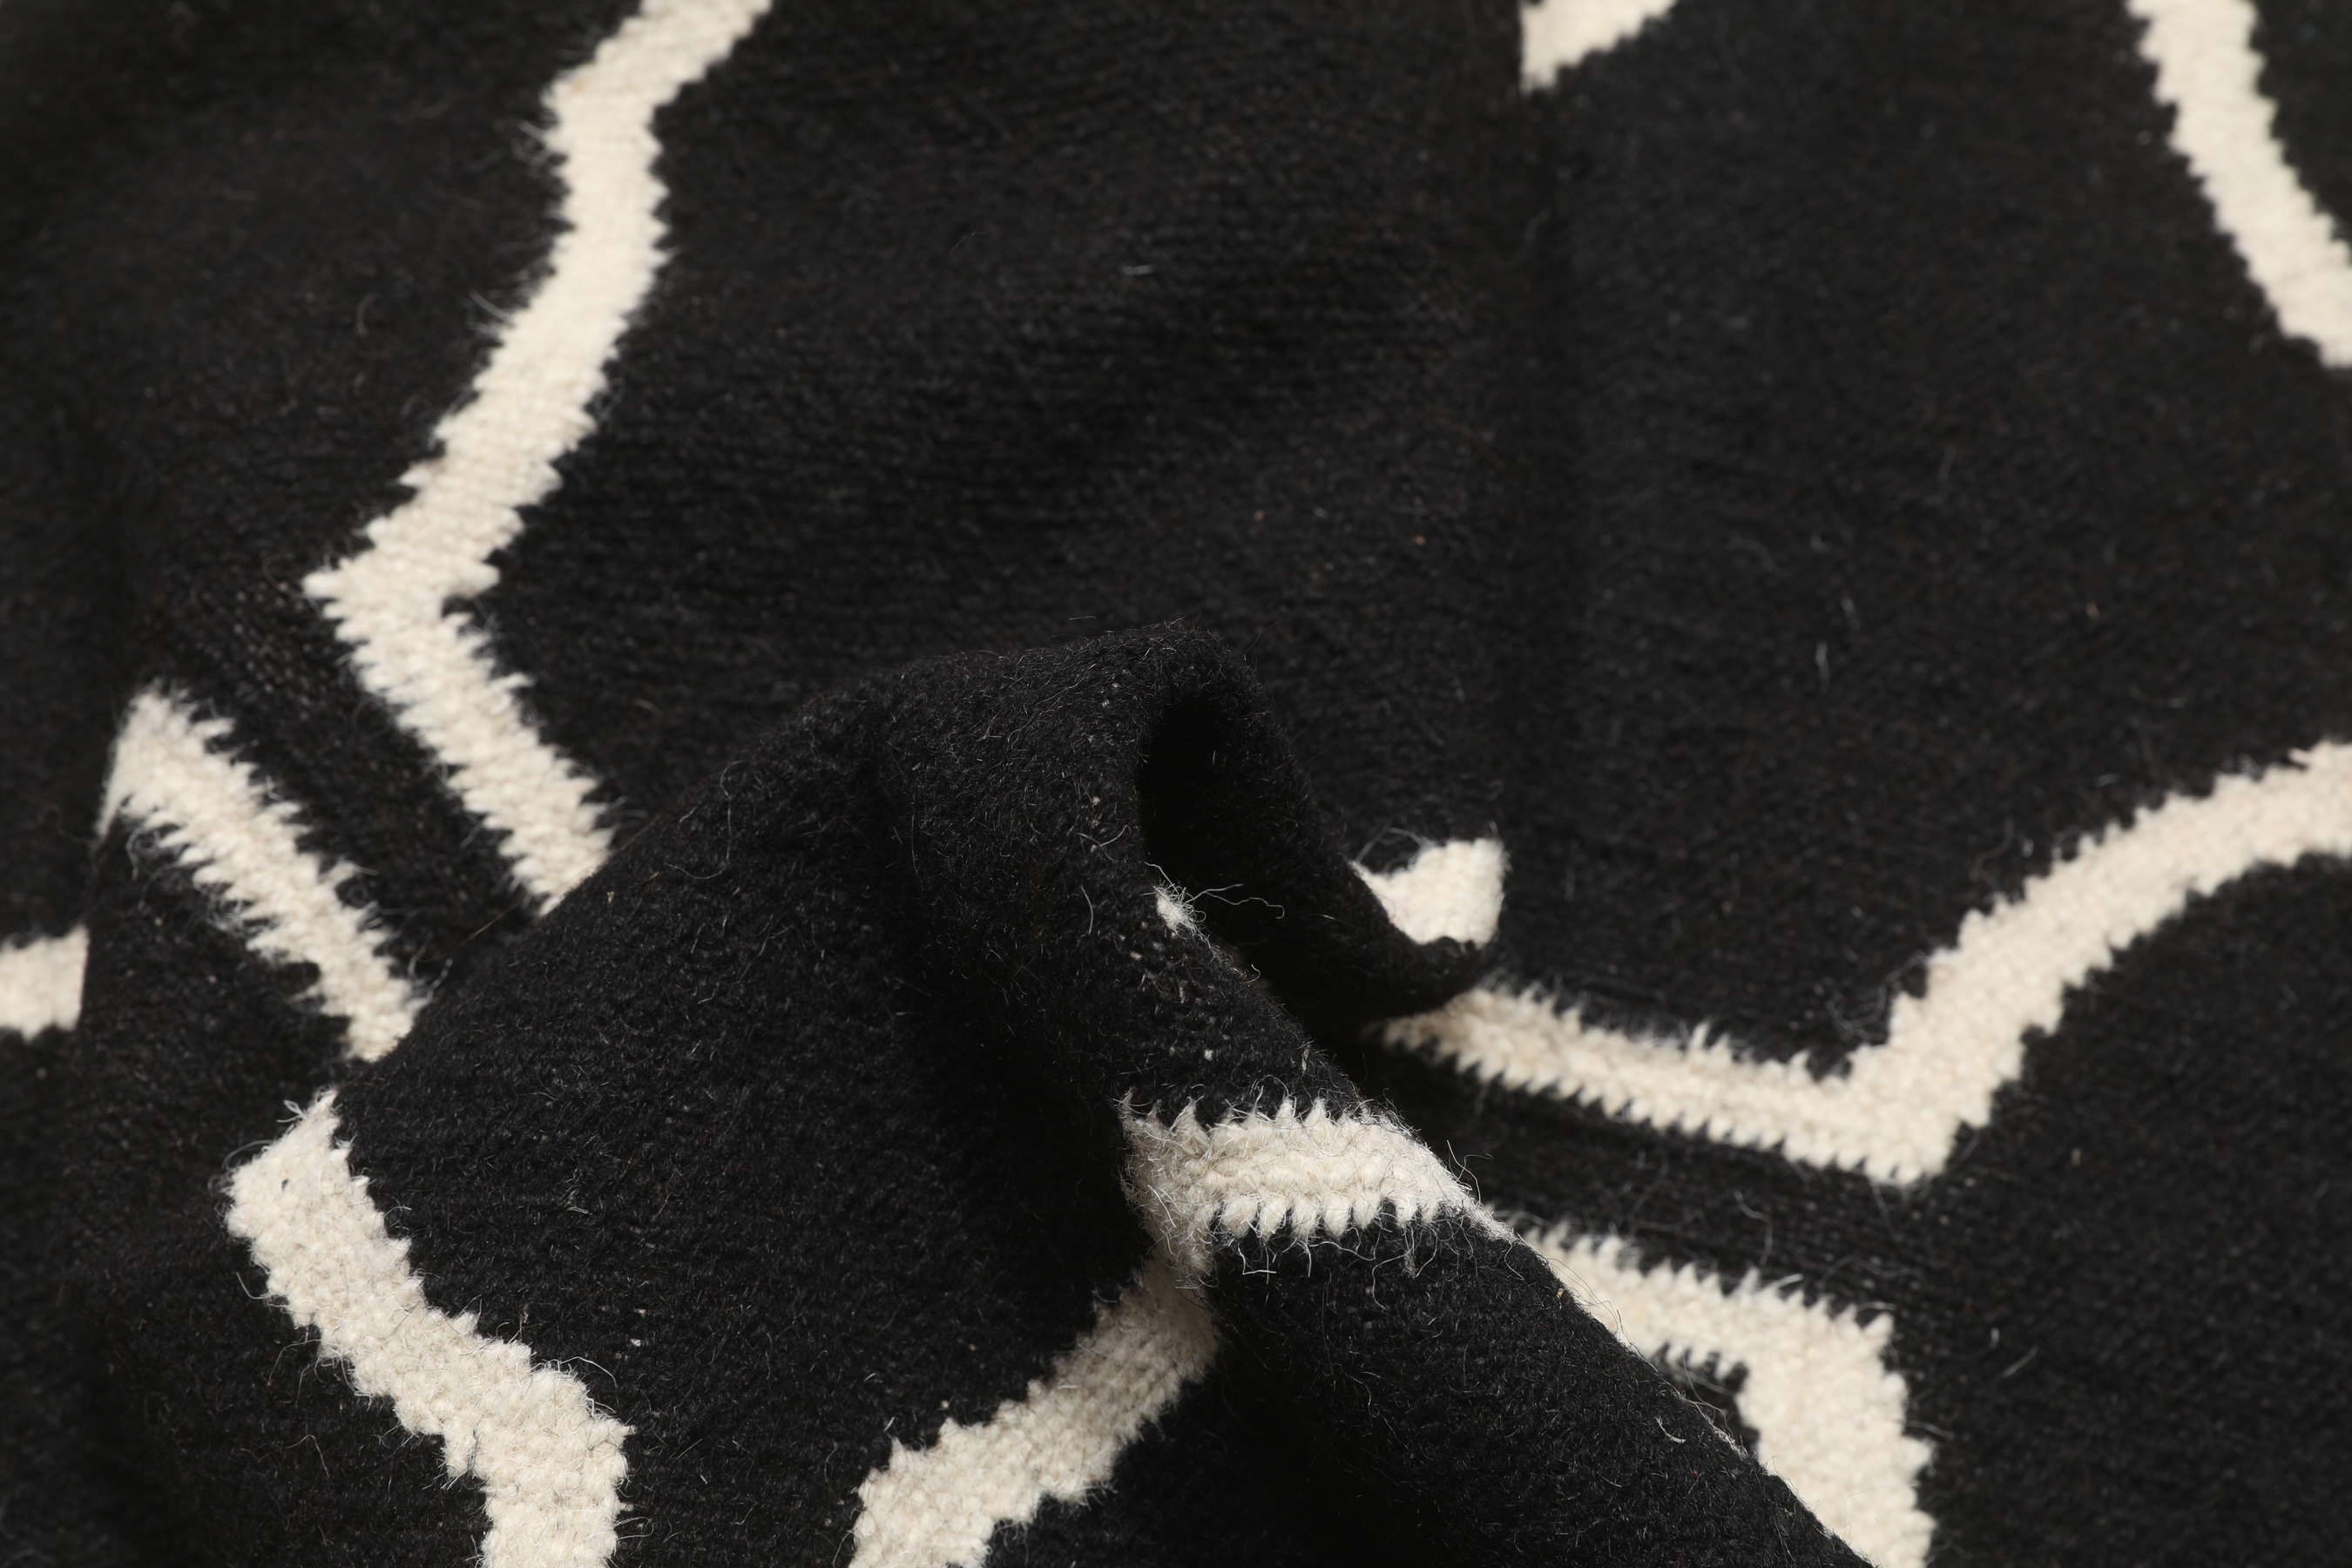 London 120x180 Small Black/Off White Geometric Wool Rug